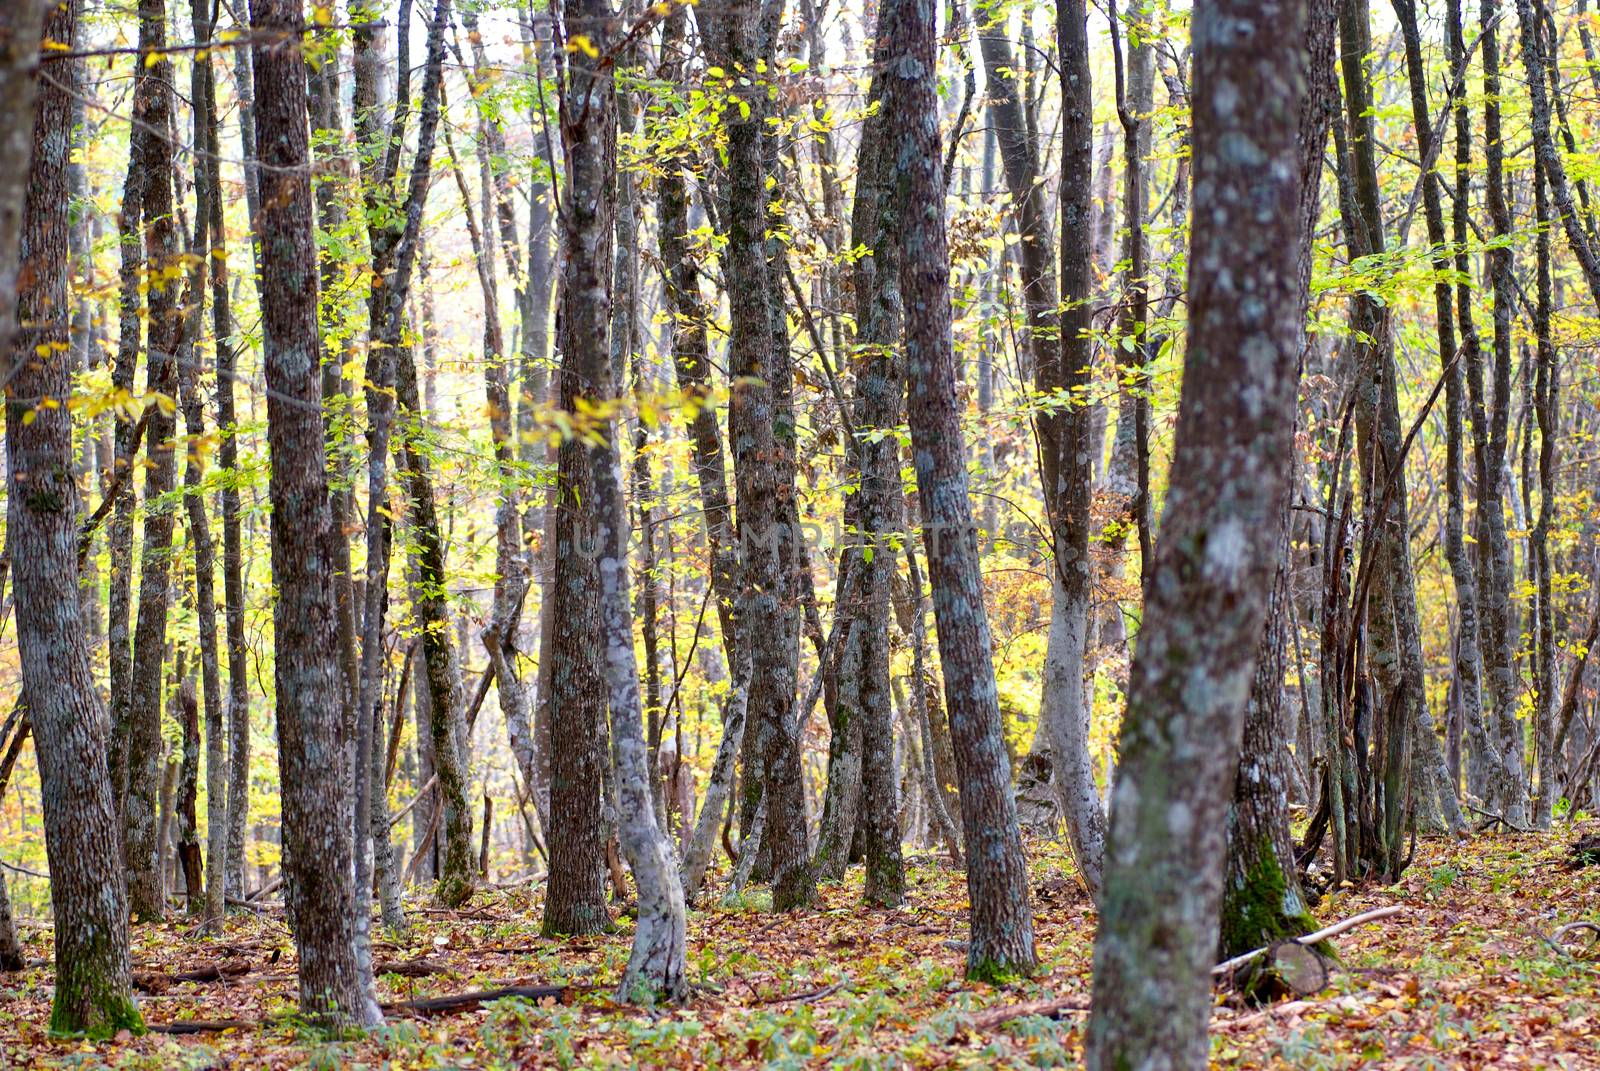 Autumn forest by vapi